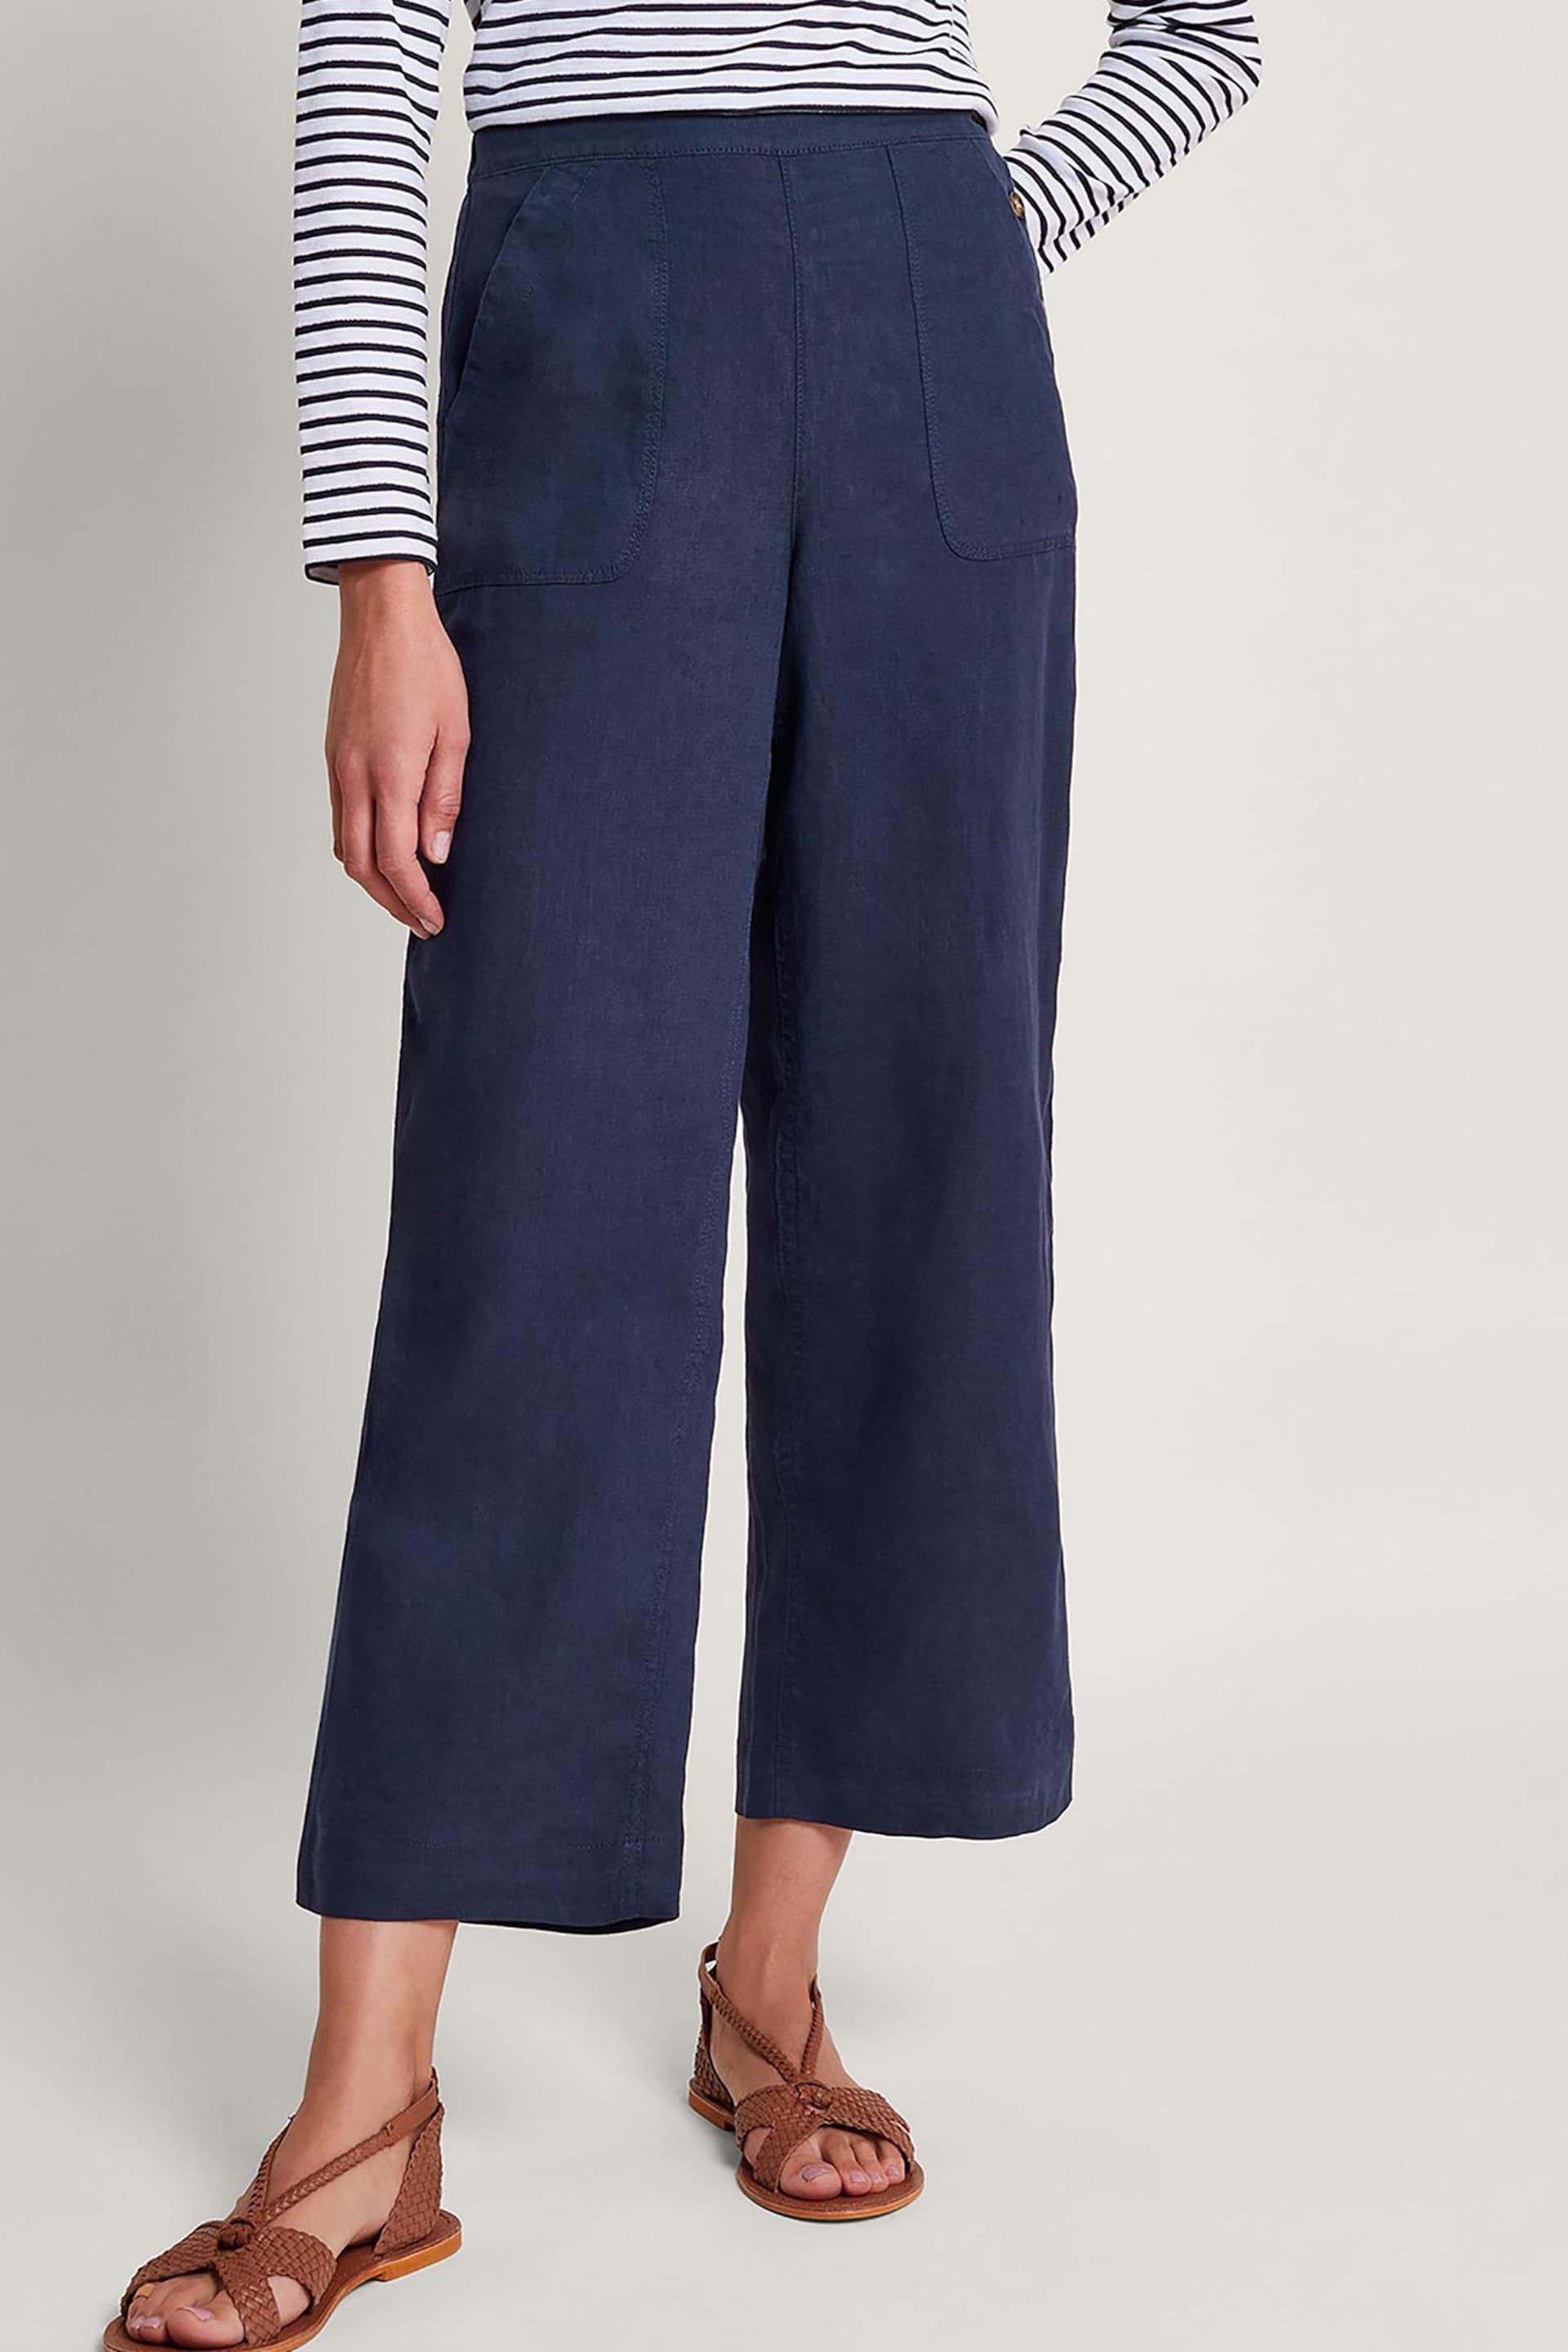 Monsoon Blue Parker Linen Crop Trousers - Image 4 of 6